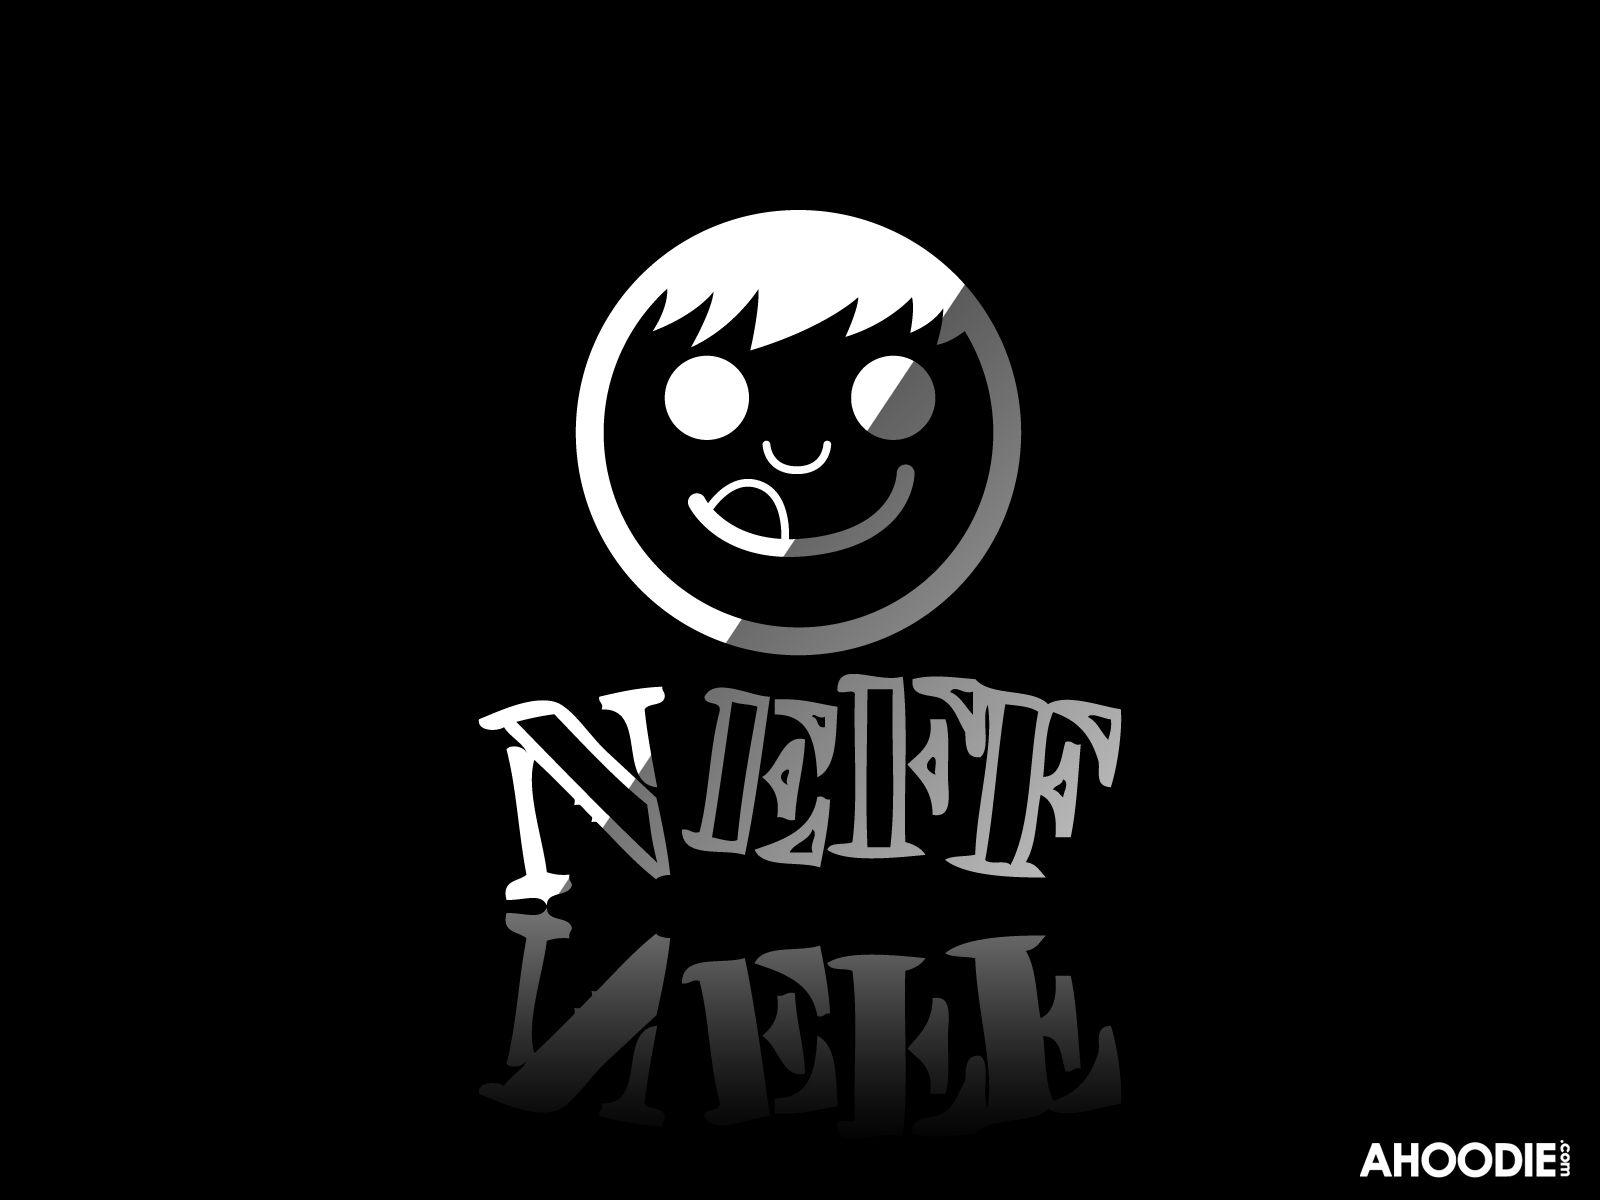 Neff Bones Black Background